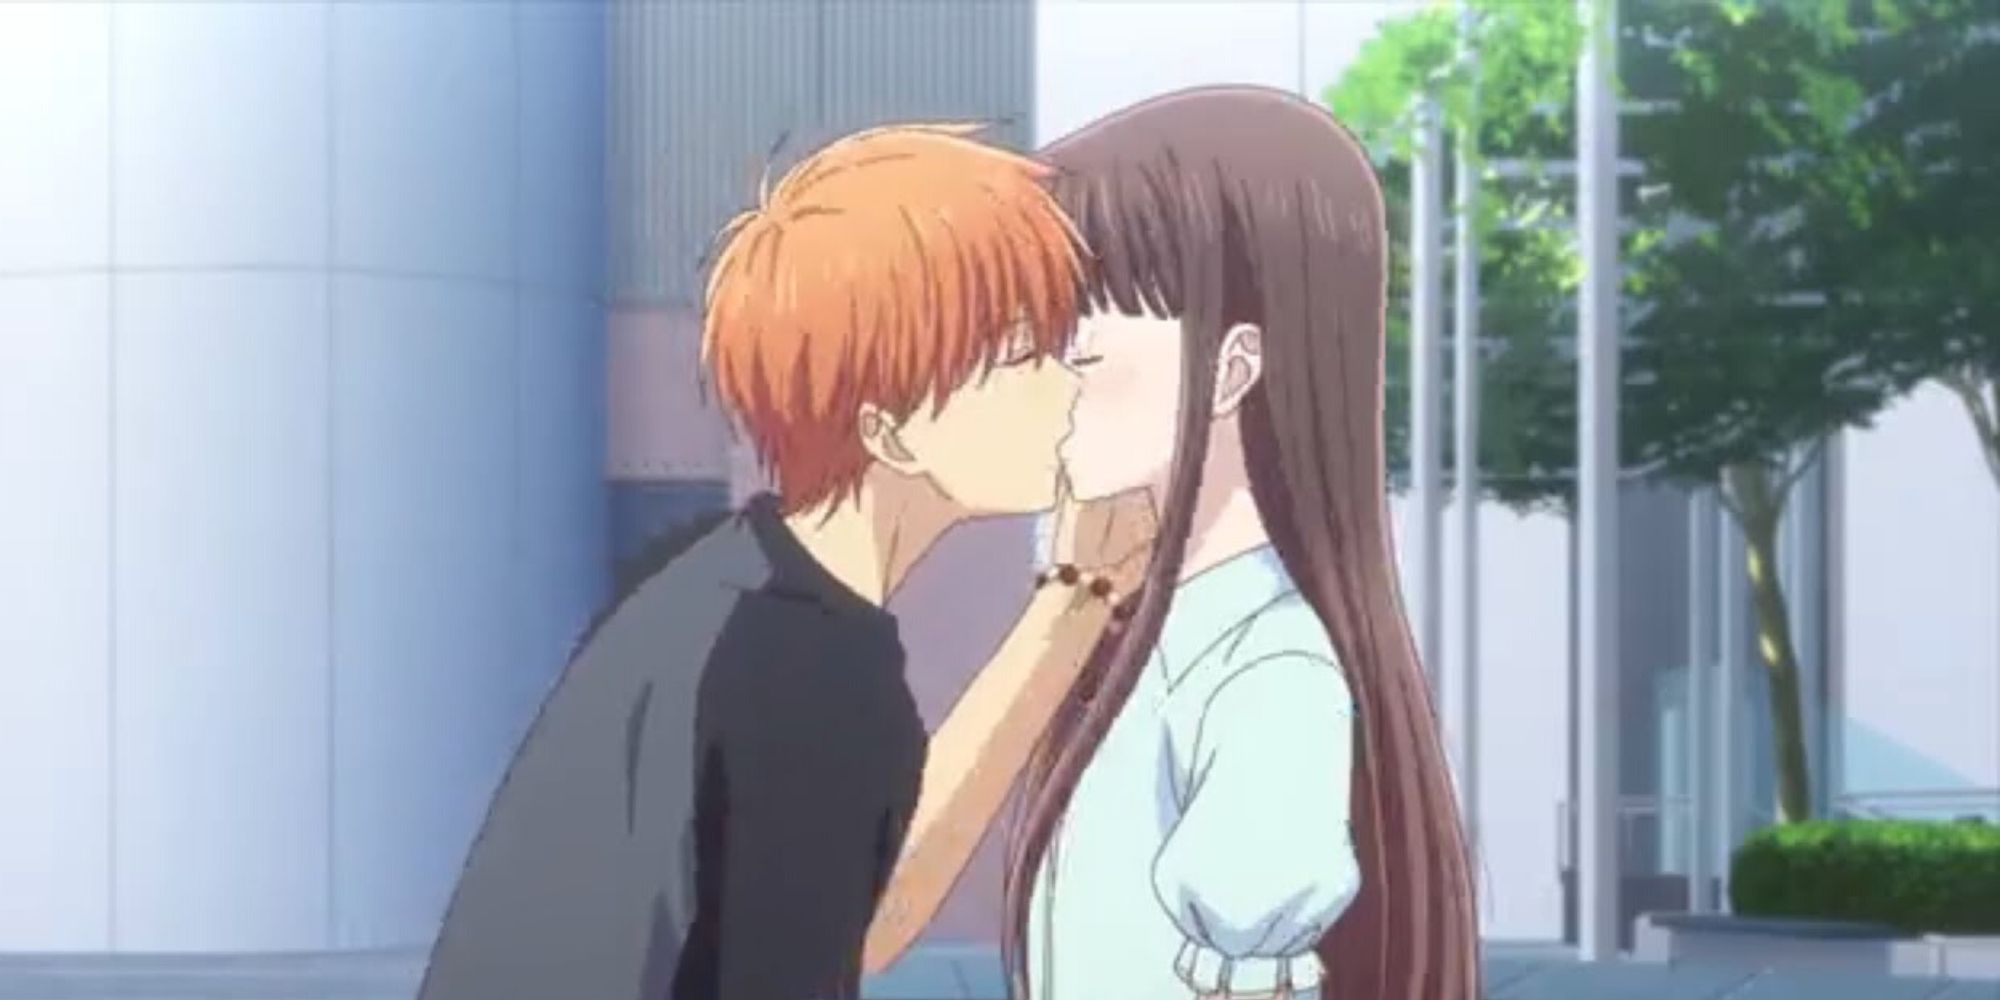 Pin by renko 08 on Romantic manga | Anime couples manga, Webtoon, Anime kiss  scenes